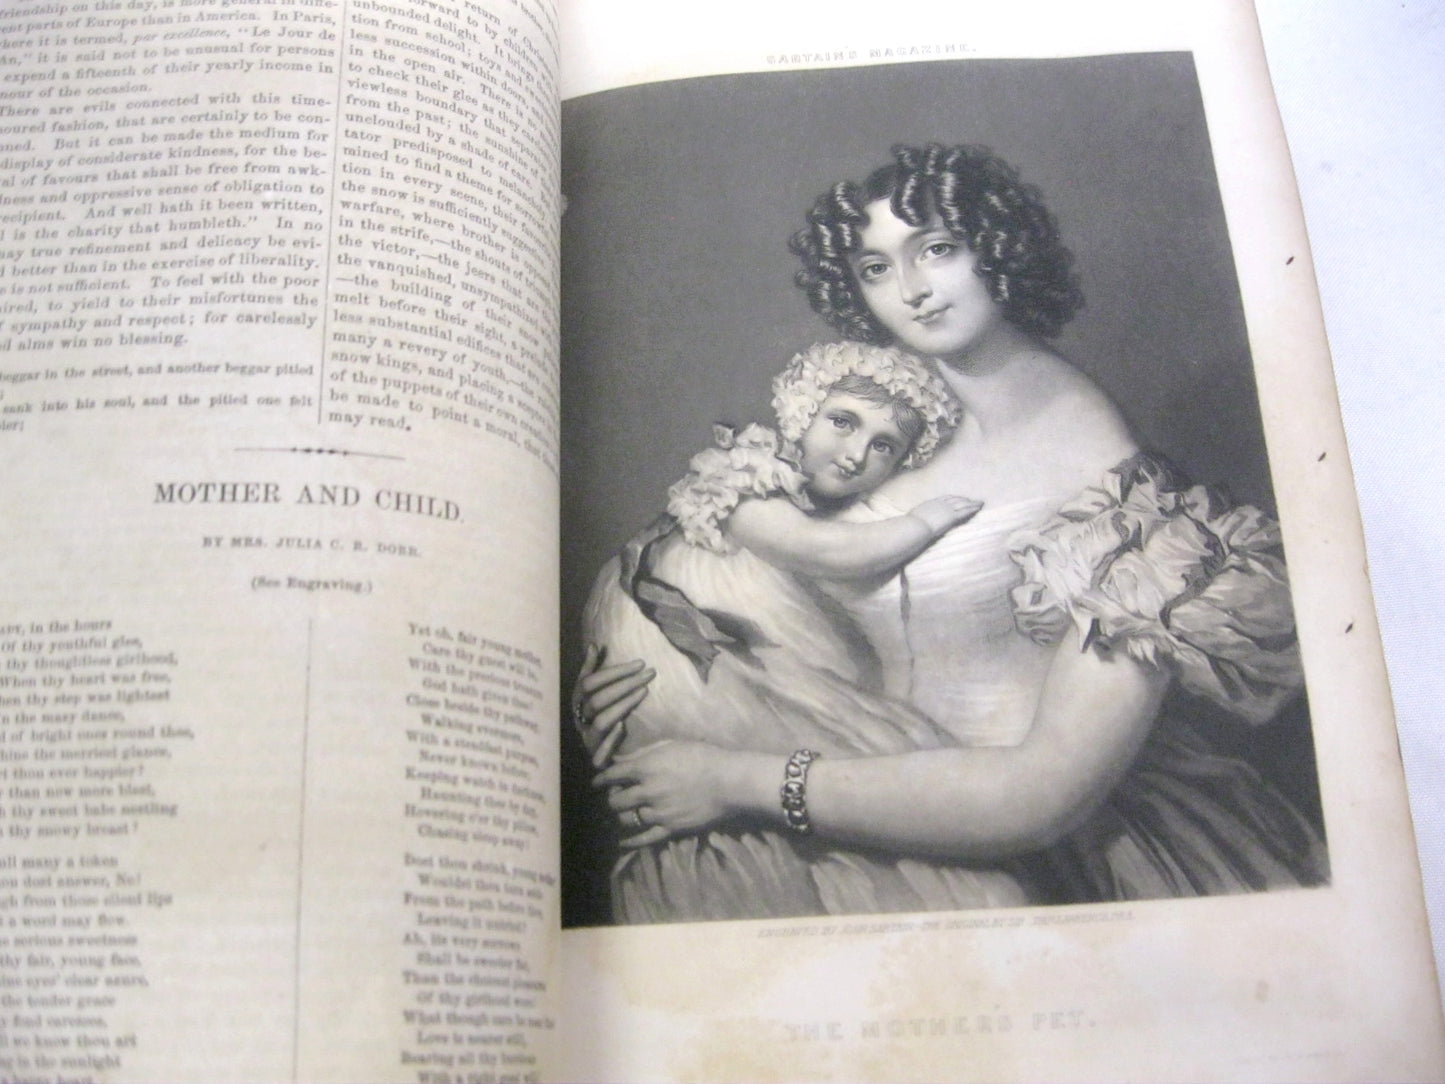 Sartain's Union Magazine for 1851